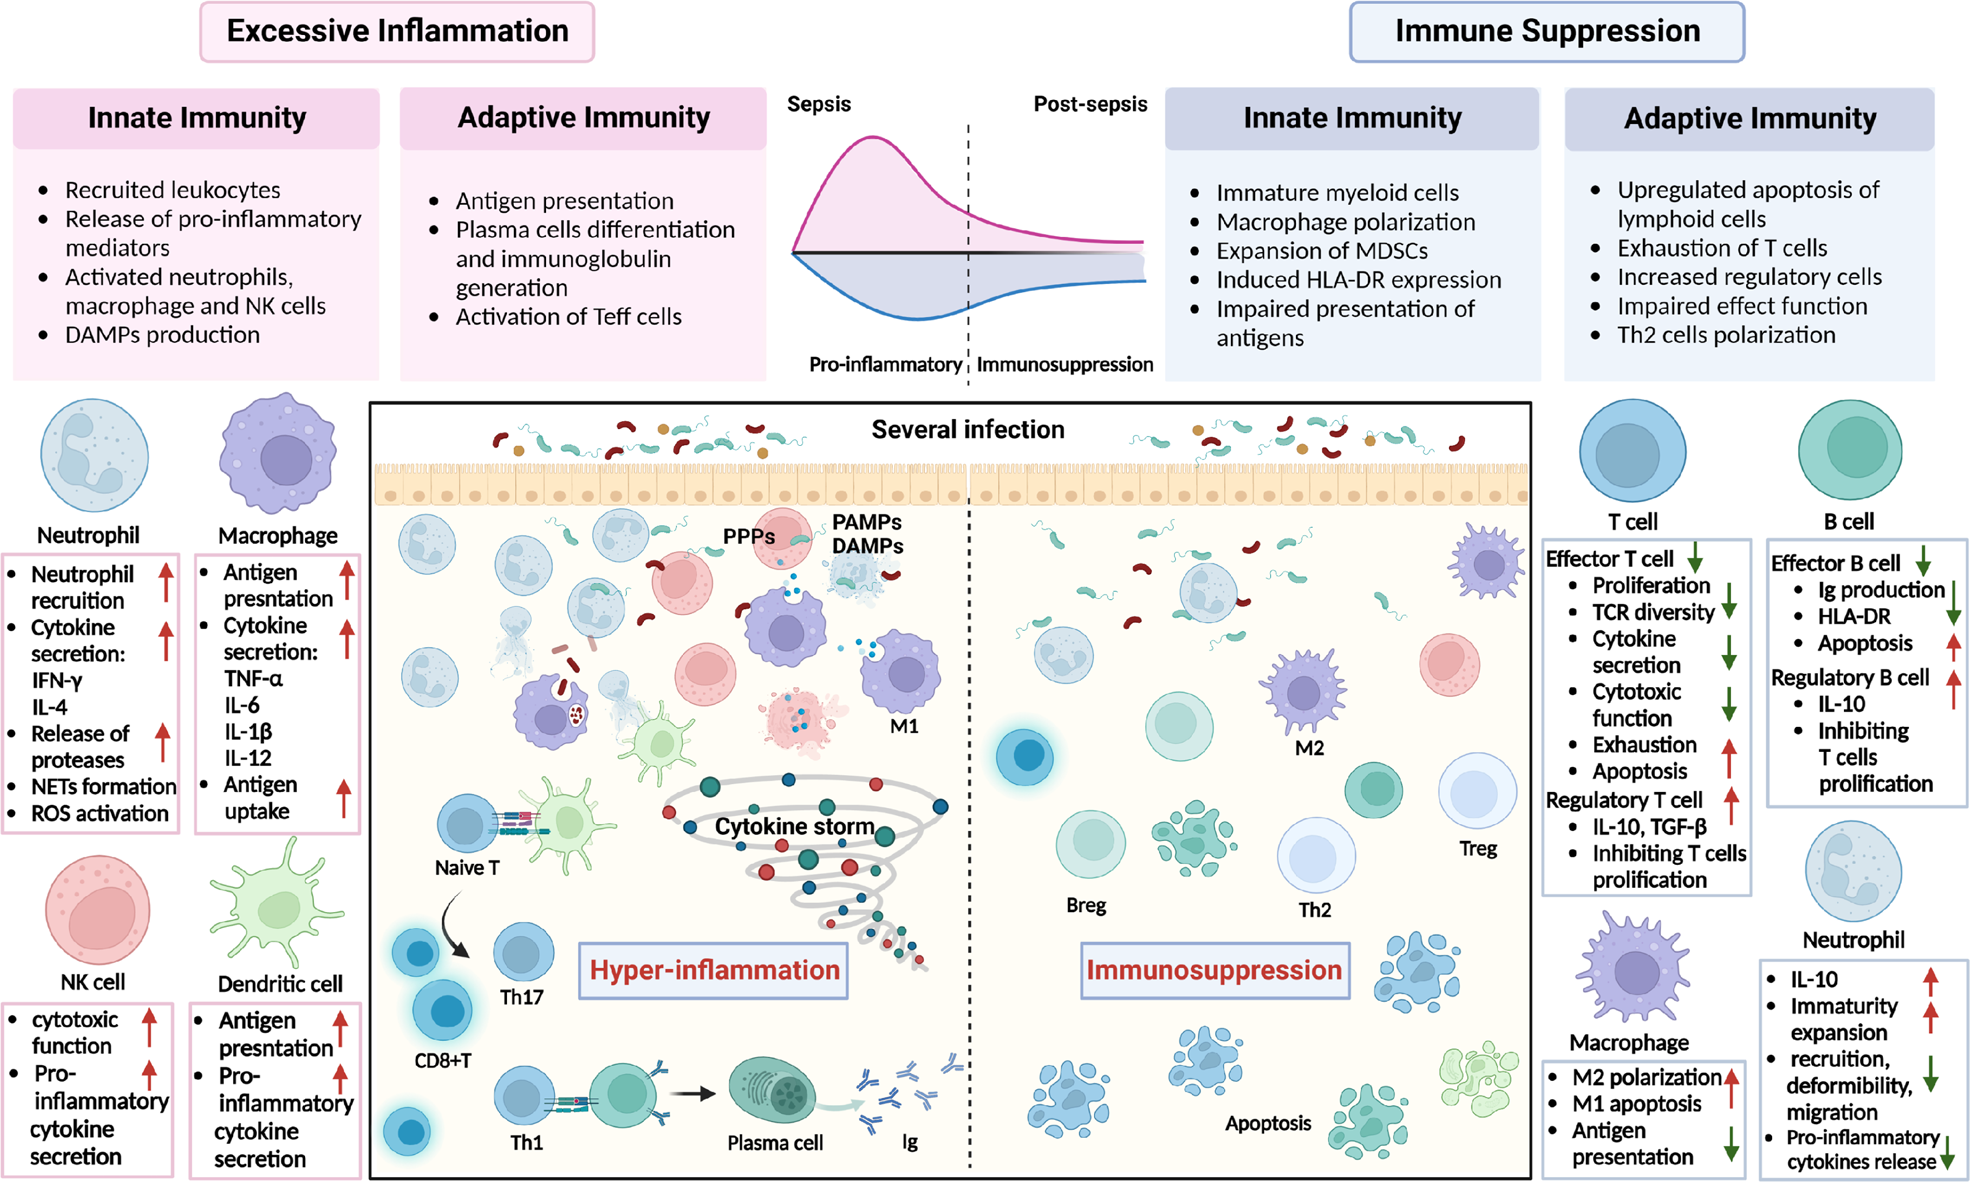 Epigenetic mechanisms of Immune remodeling in sepsis: targeting